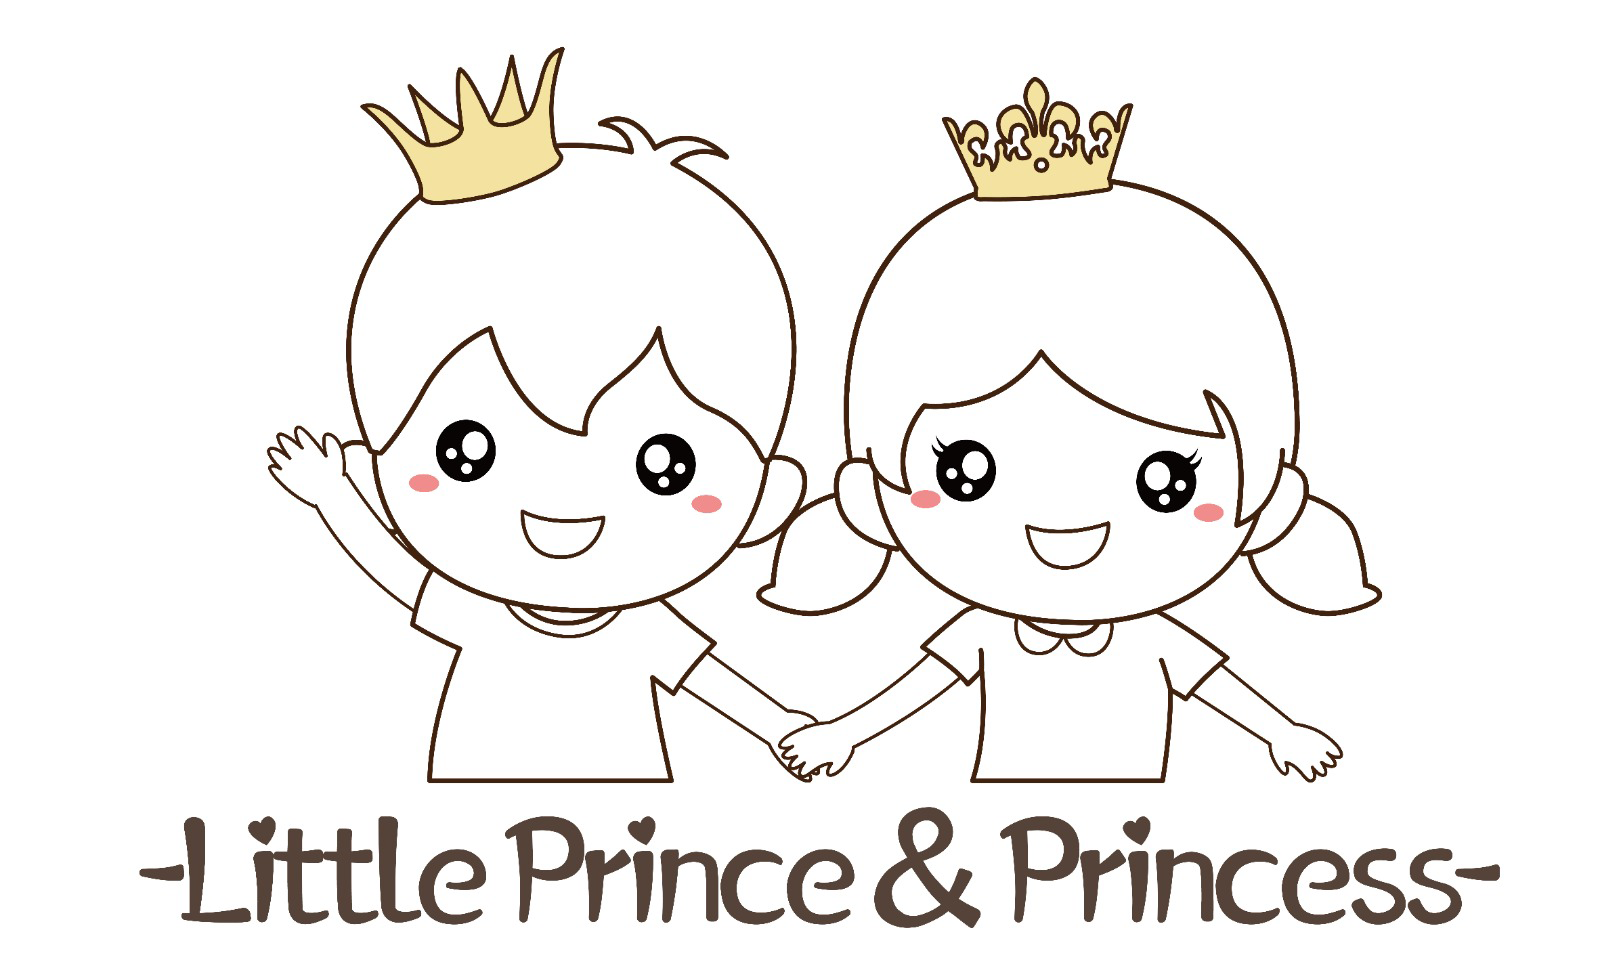 Little Prince & Princess